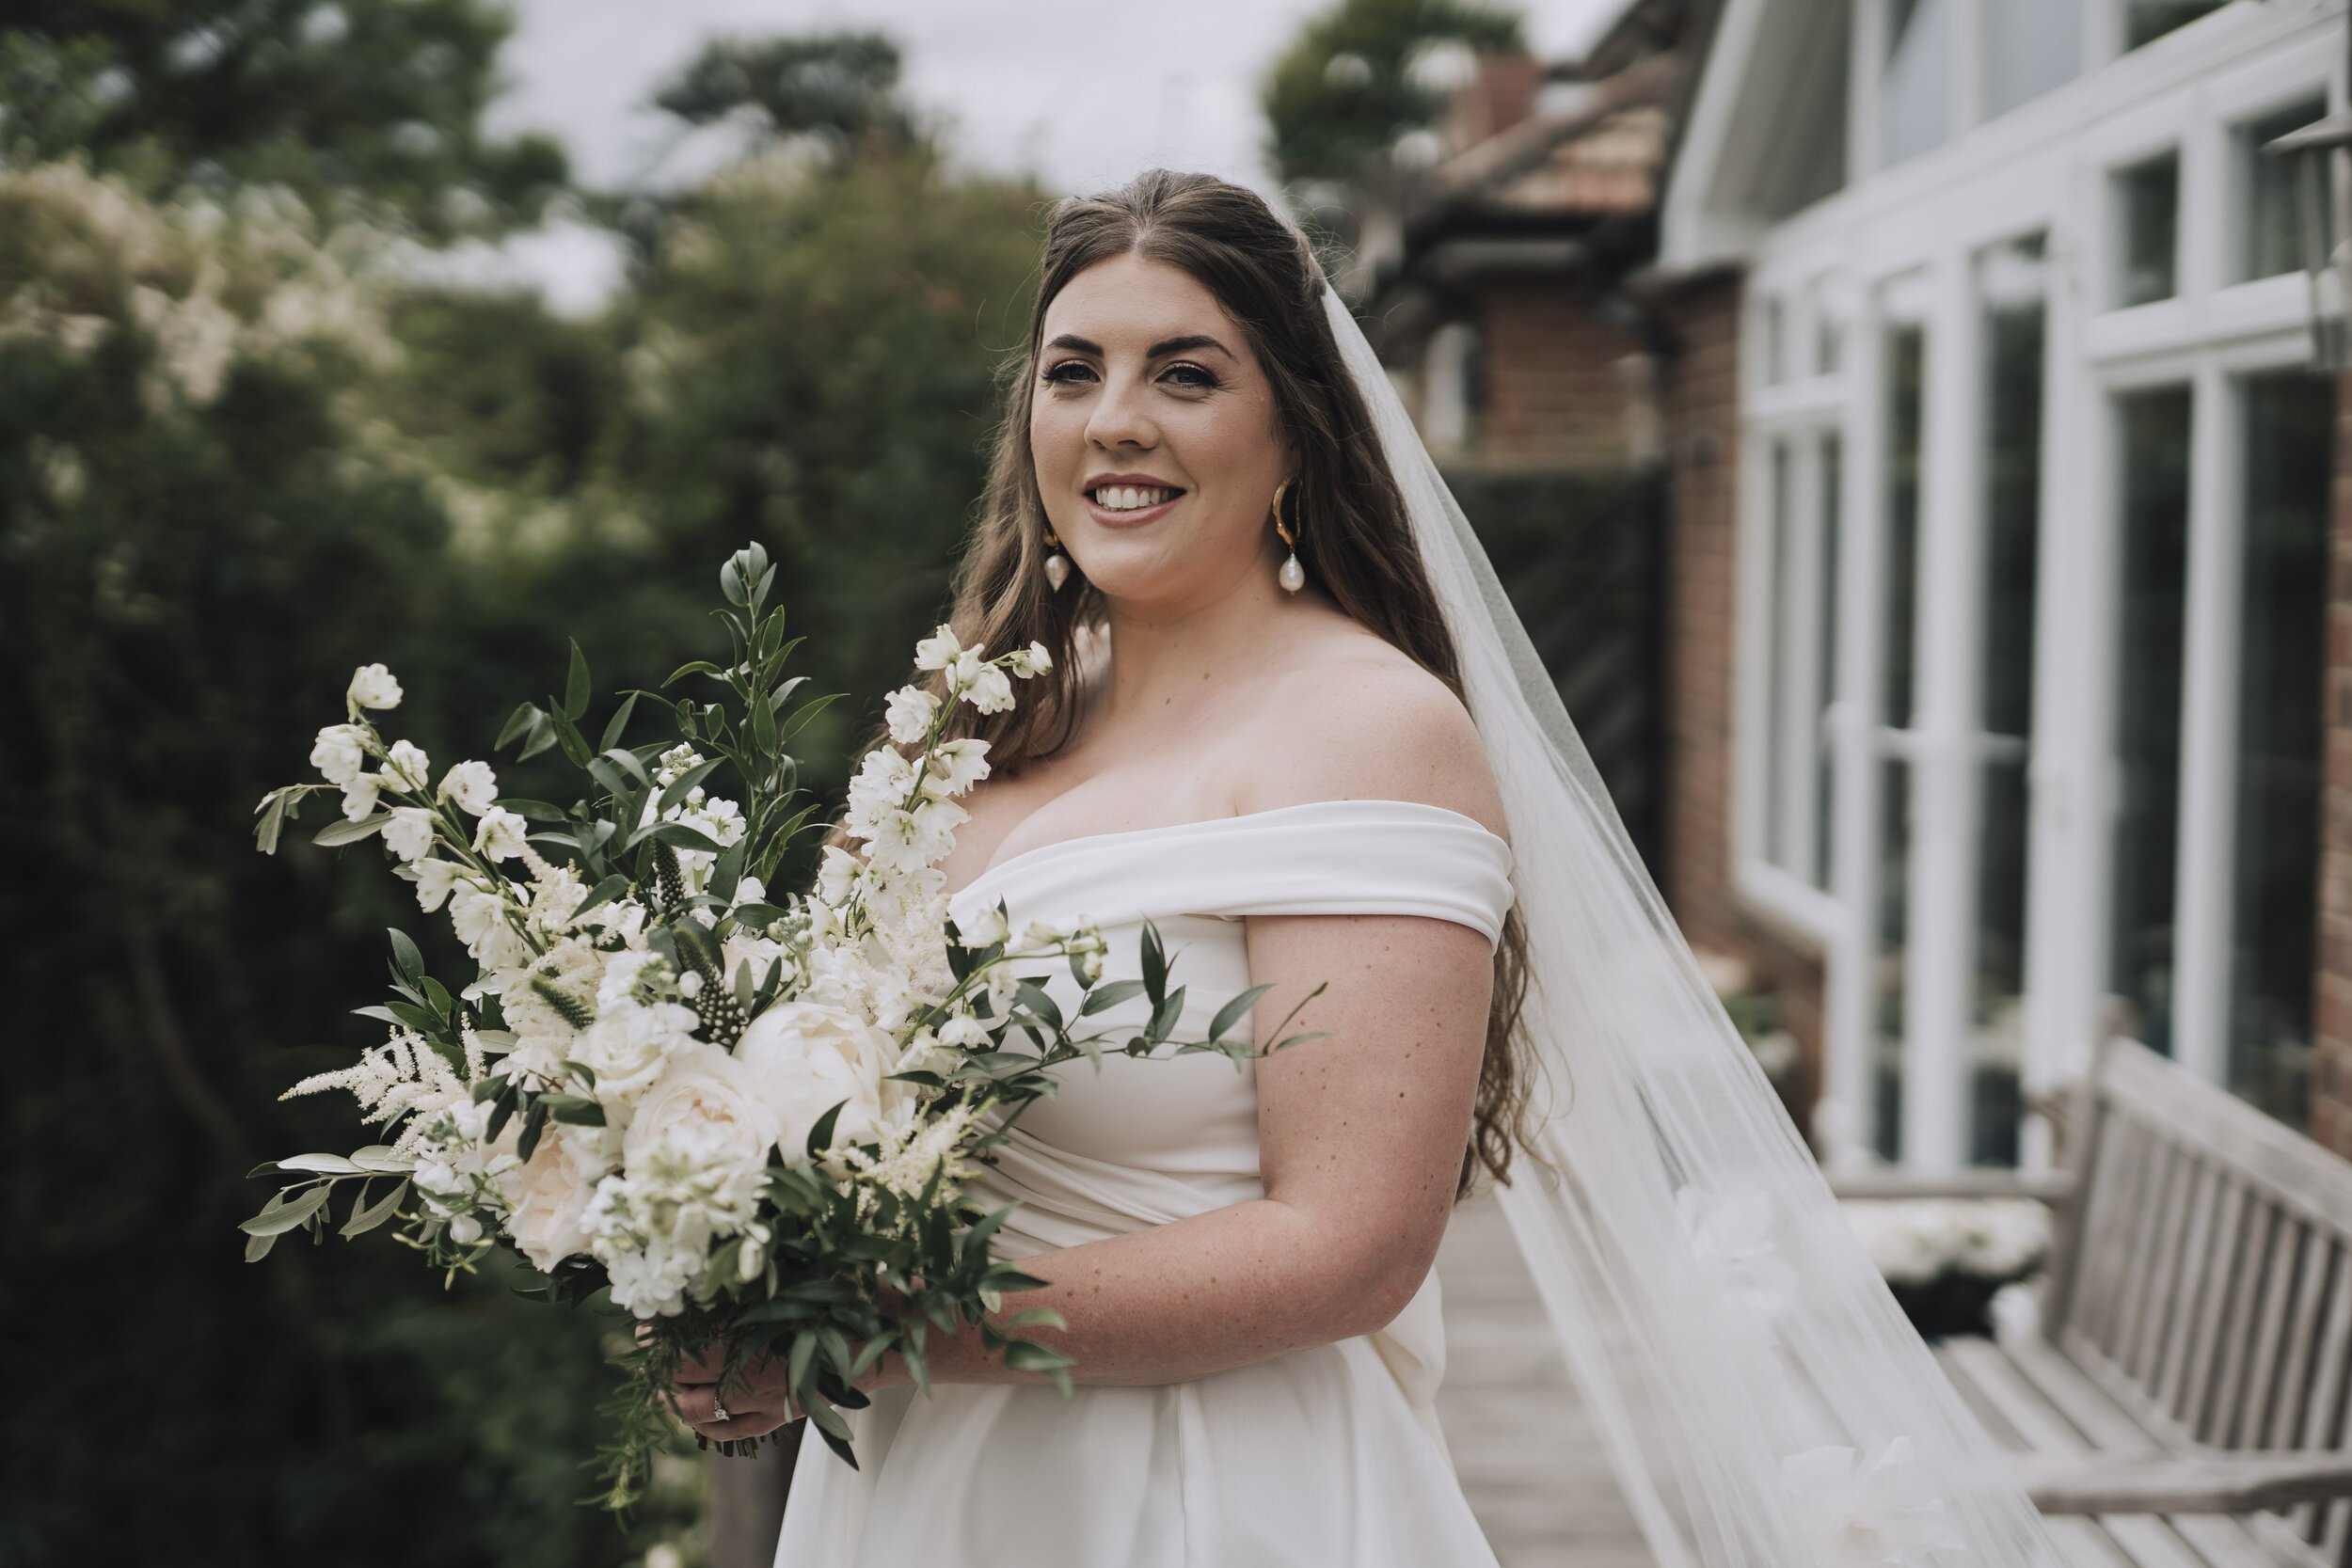 Beautiful bride Hannah wore a wedding dress by Halfpenny London